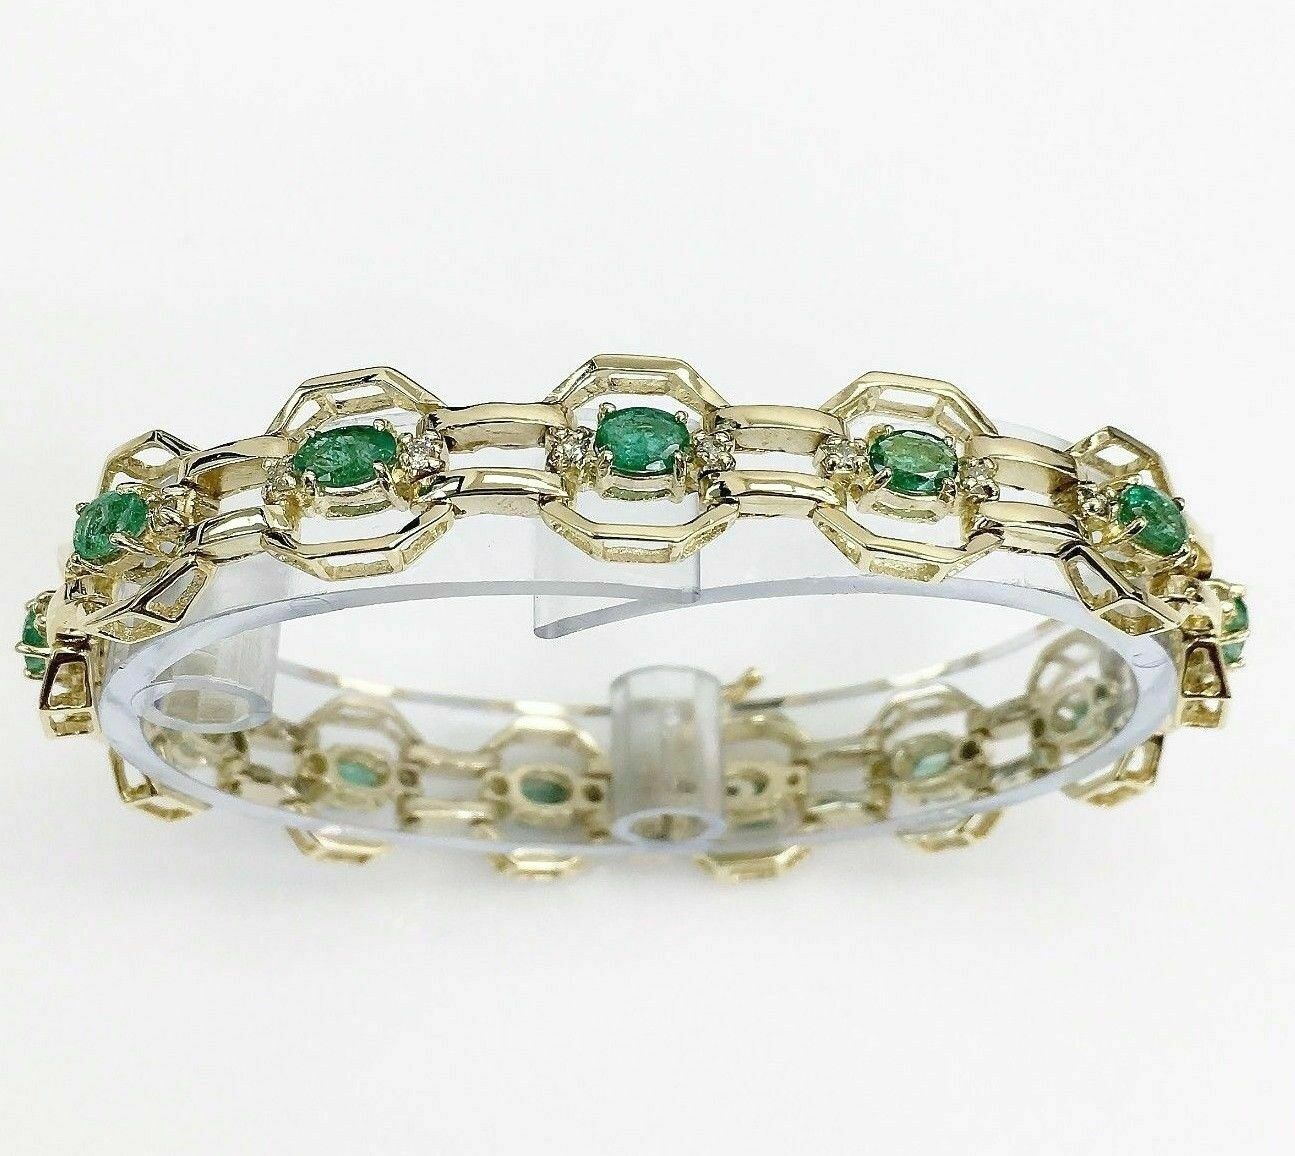 3.78 Carats t.w. Emerald and Diamond Tennis Bracelet 14KWhite Gold 3 Cts Emerald